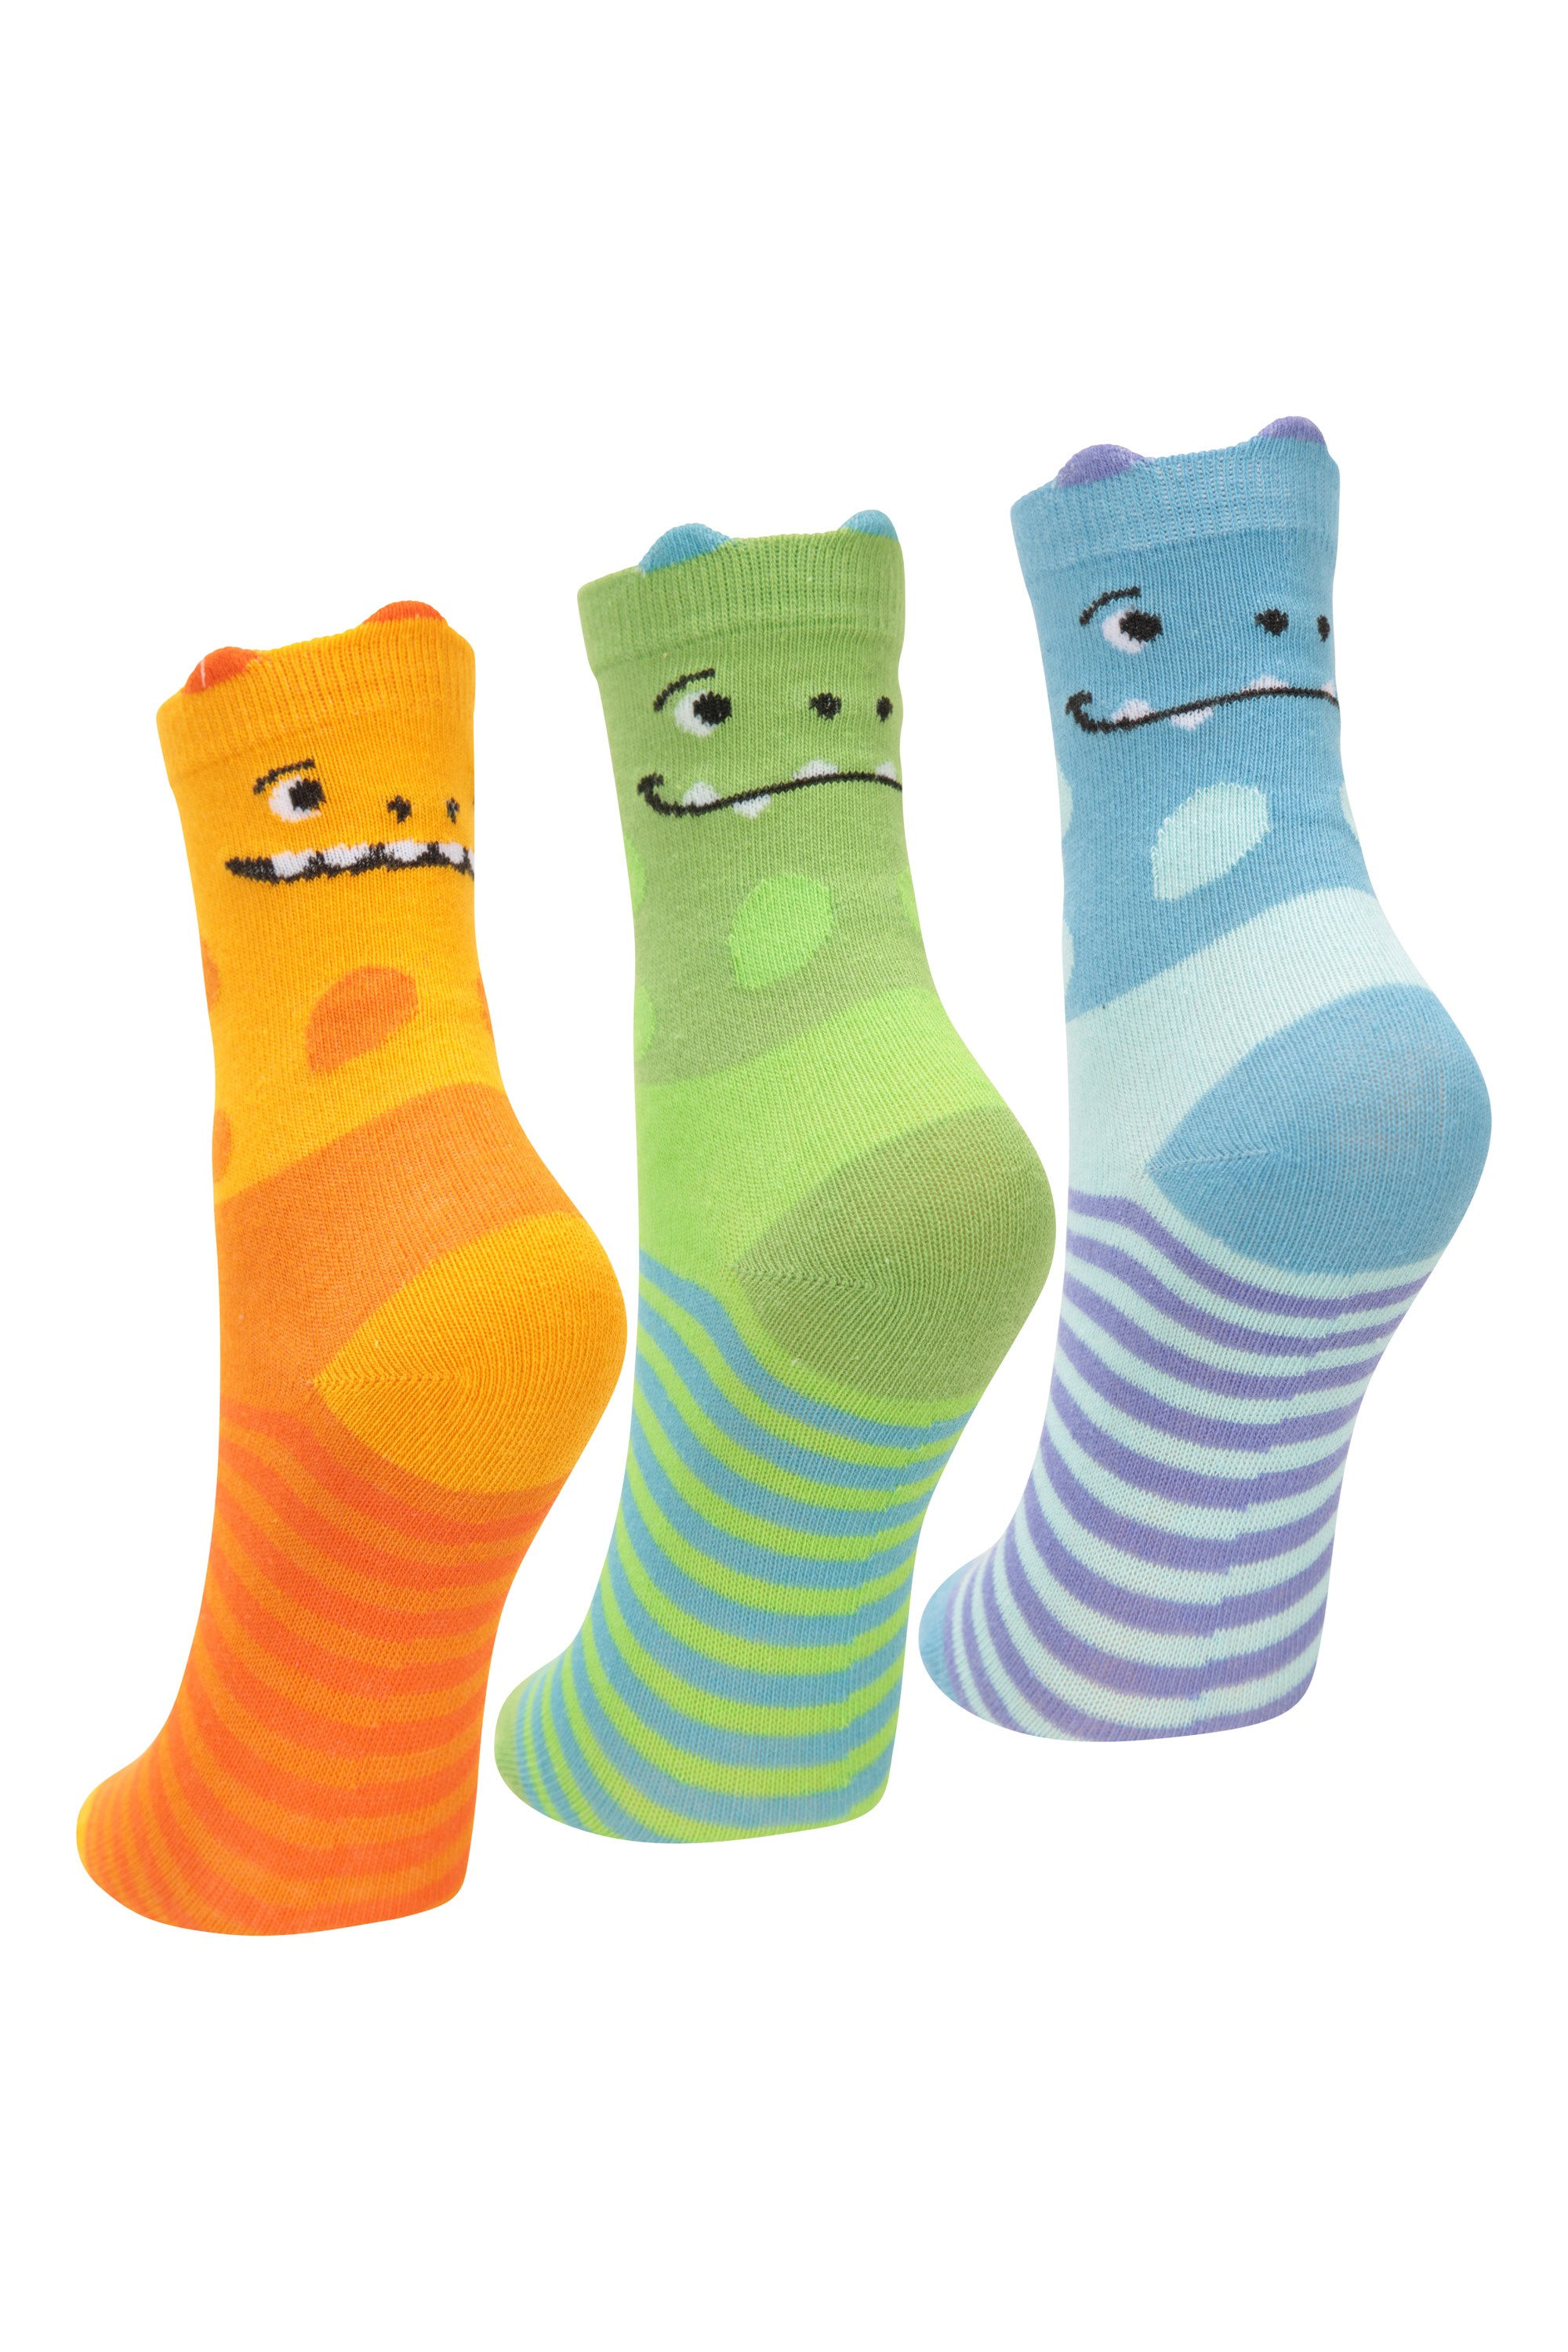 Kids Animal Novelty Socks - Orange